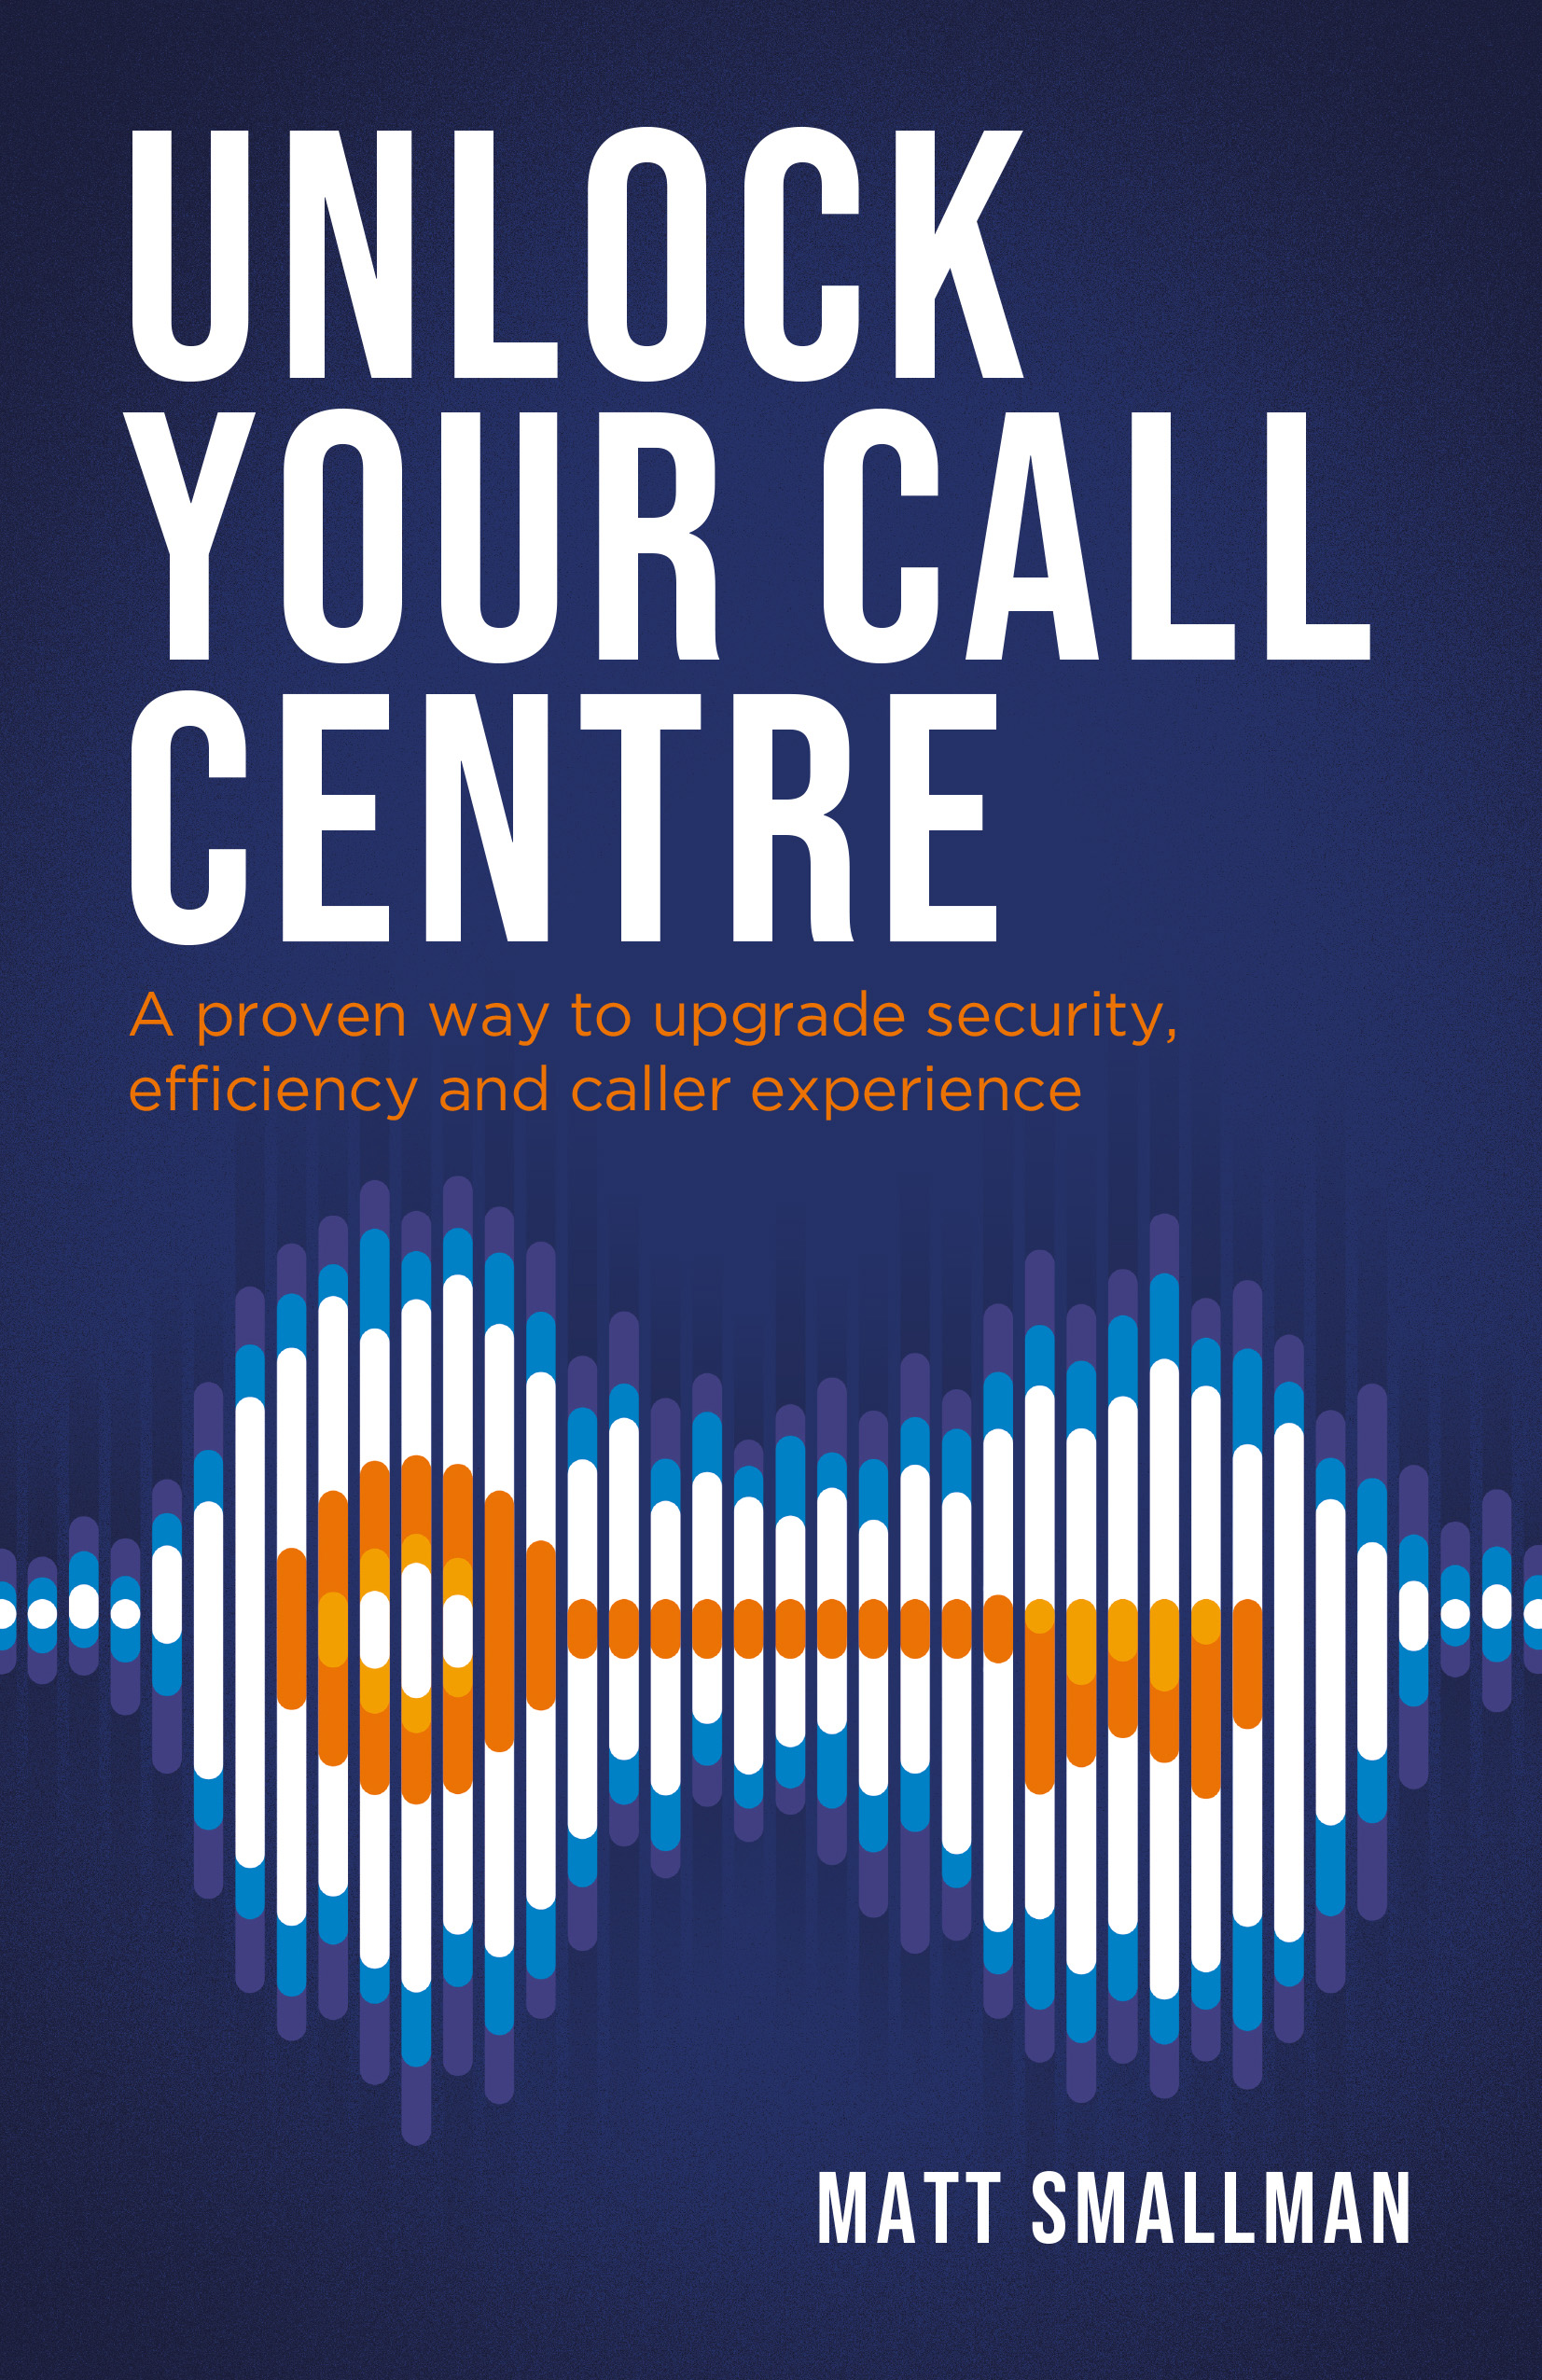 Unlock Your Call Centre